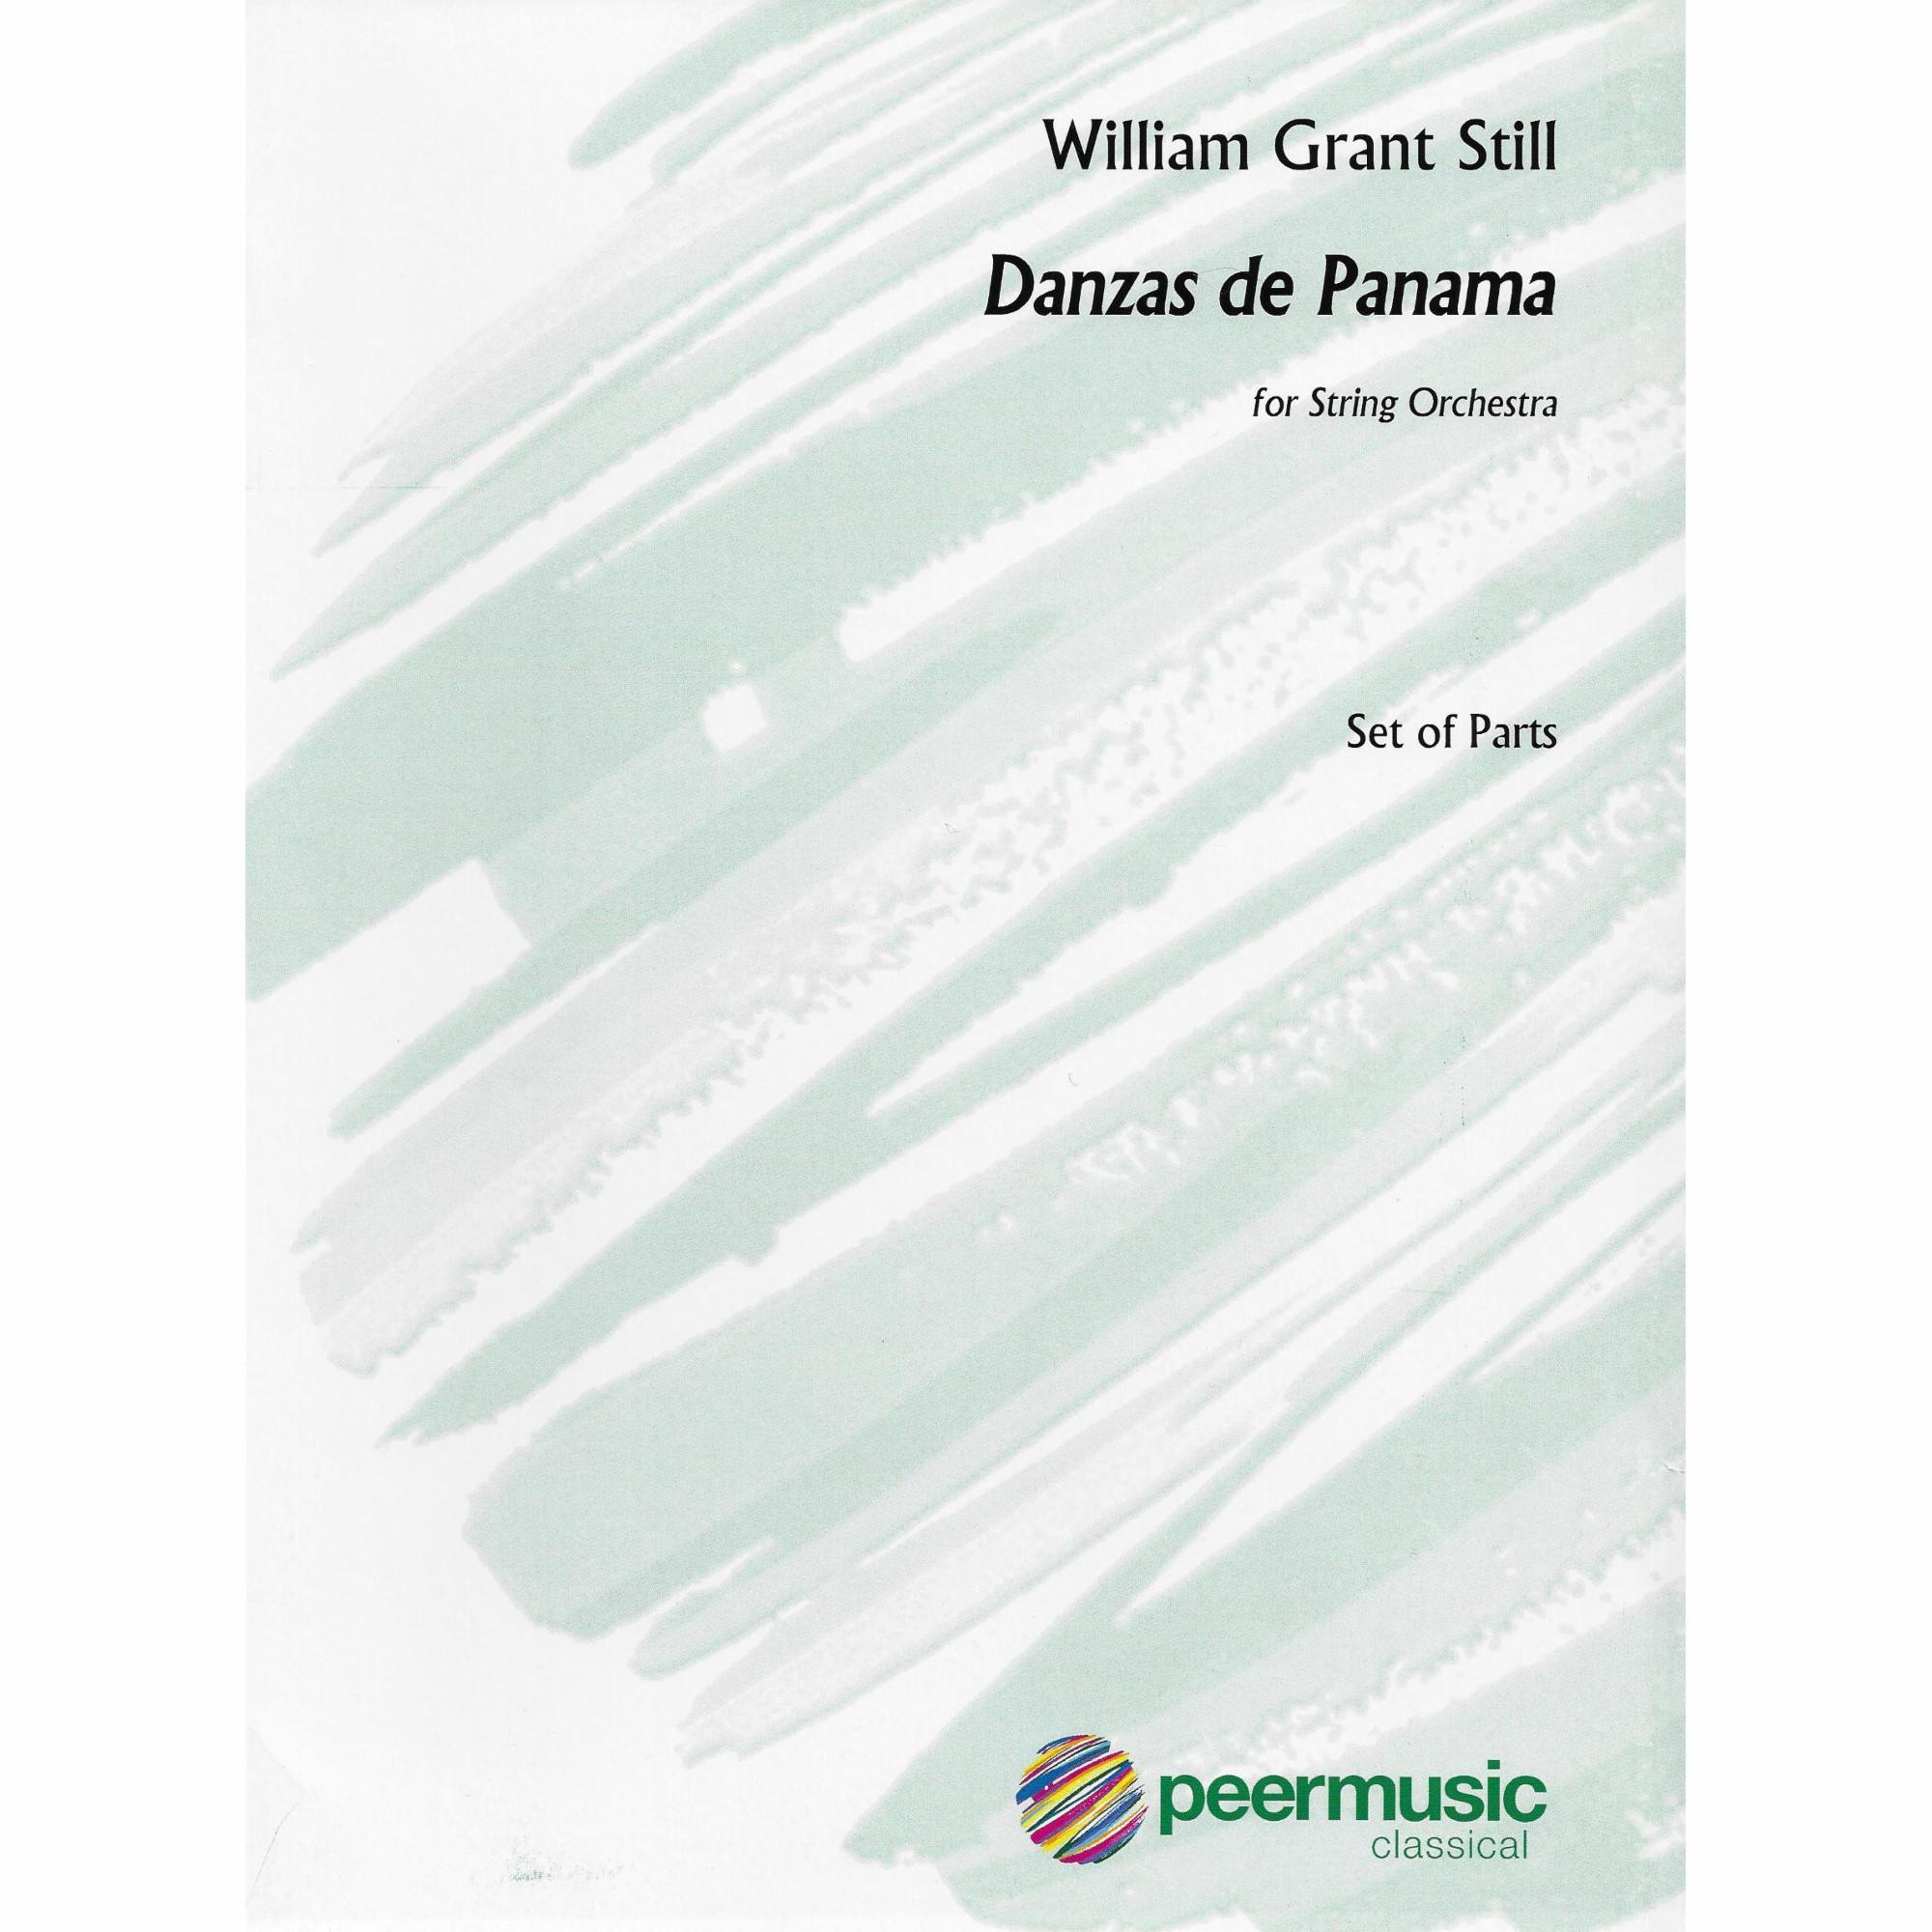 Still -- Danzas de Panama for String Orchestra